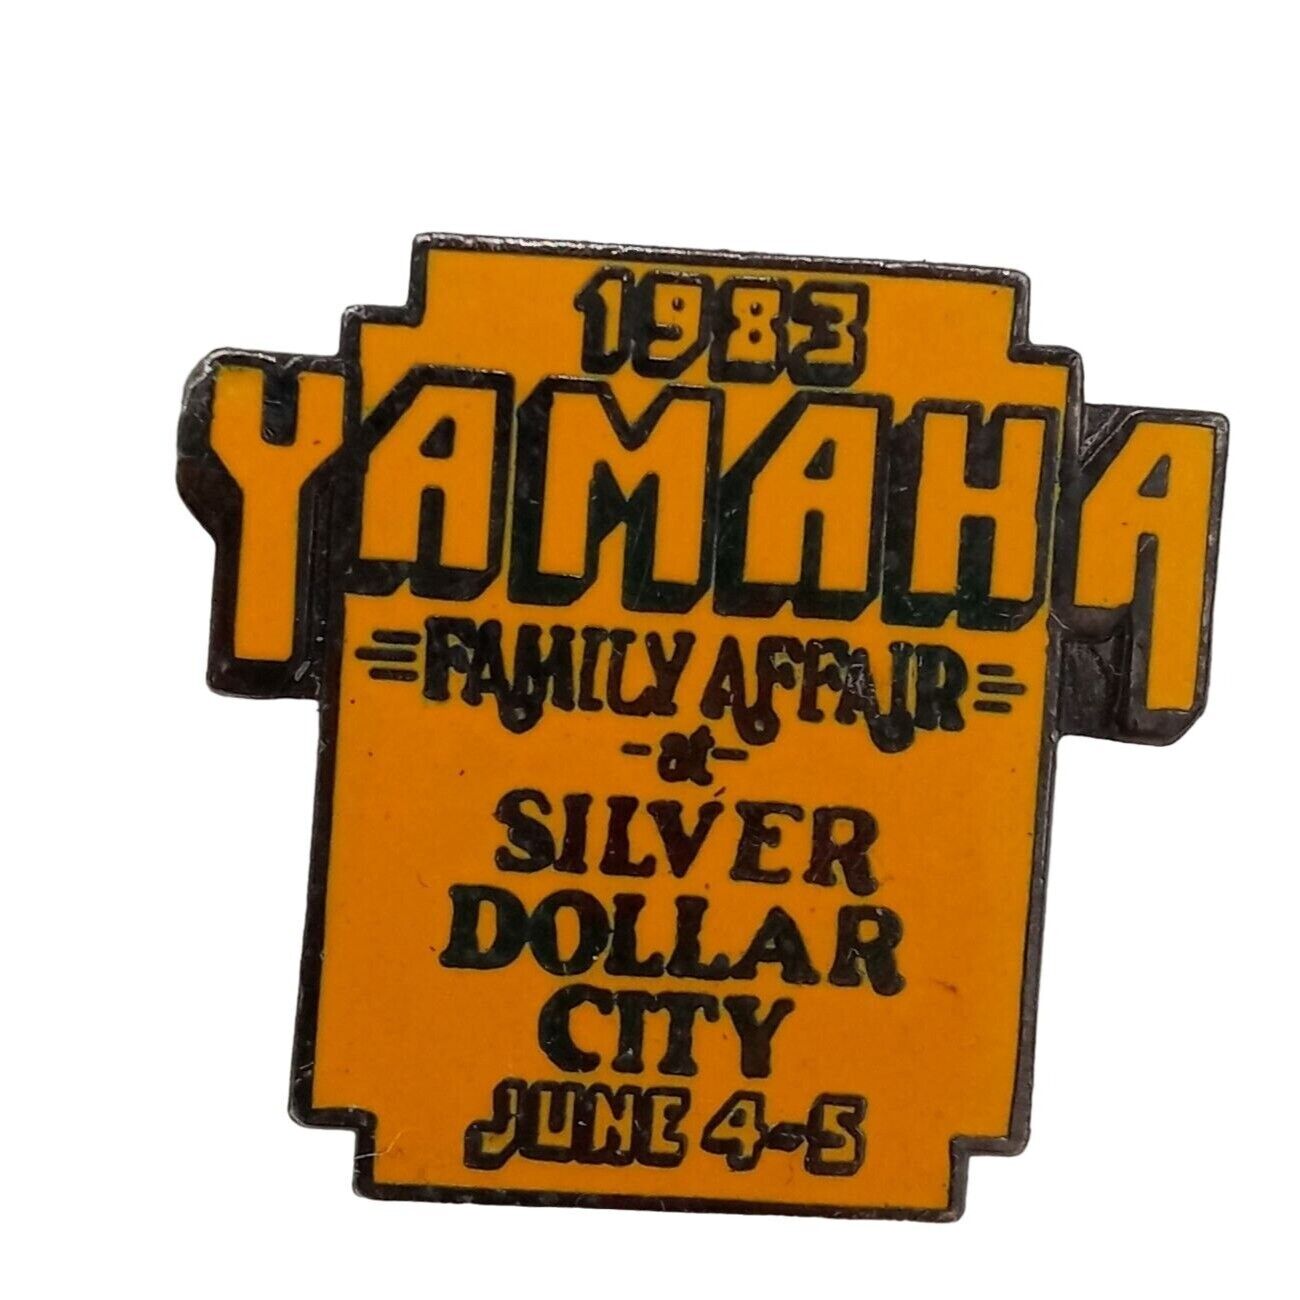 1983 Yamaha Lapel Hat Pin Brooch Silver Dollar City Family Affair Vintage Yellow